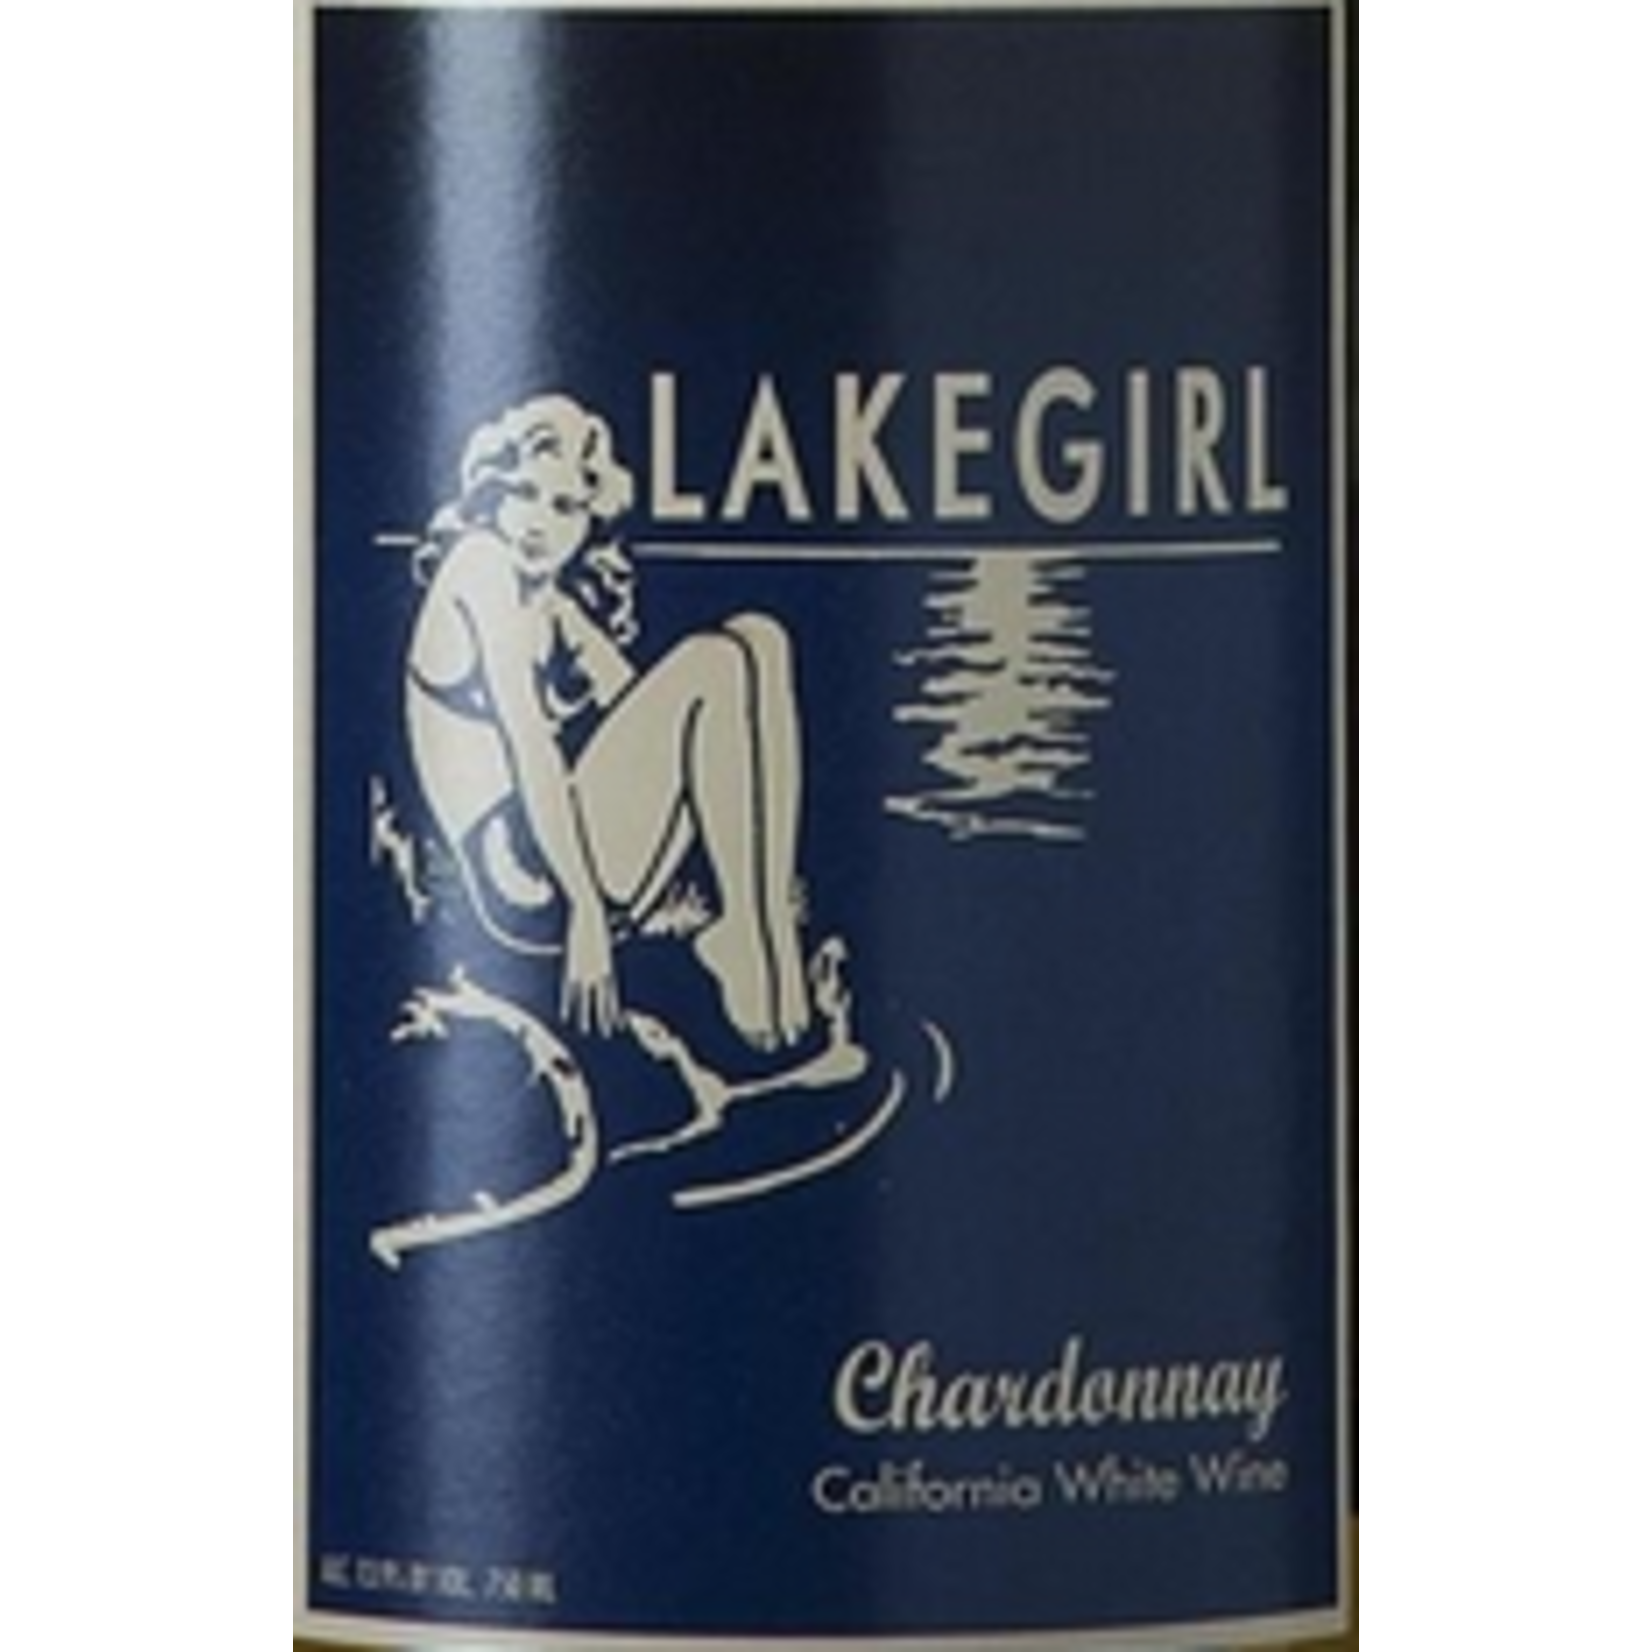 Lake Girl Chardonnay 2021 Redwood Valley, California